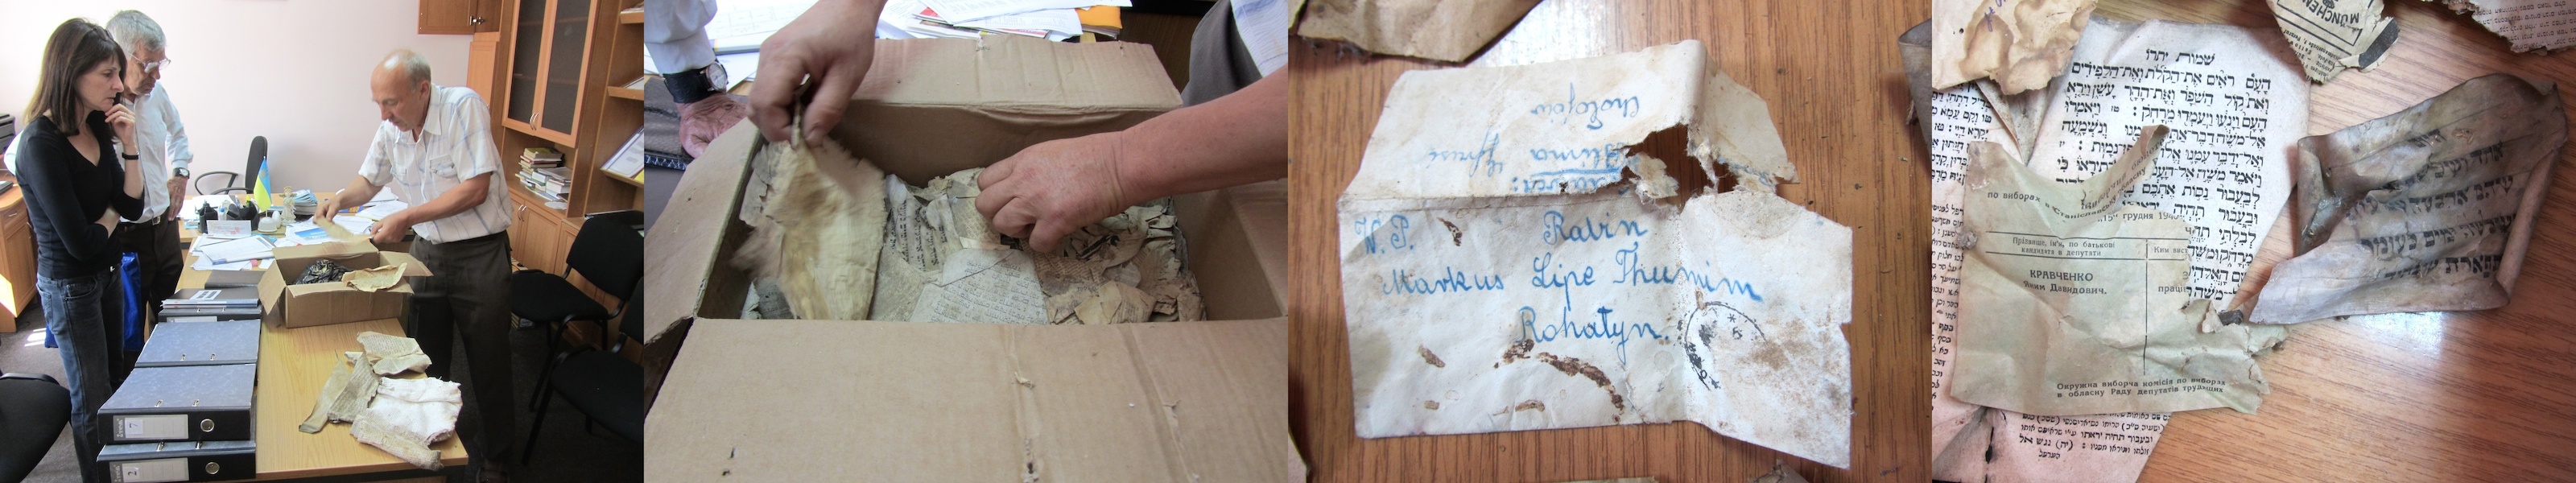 The box of Jewish paper scraps